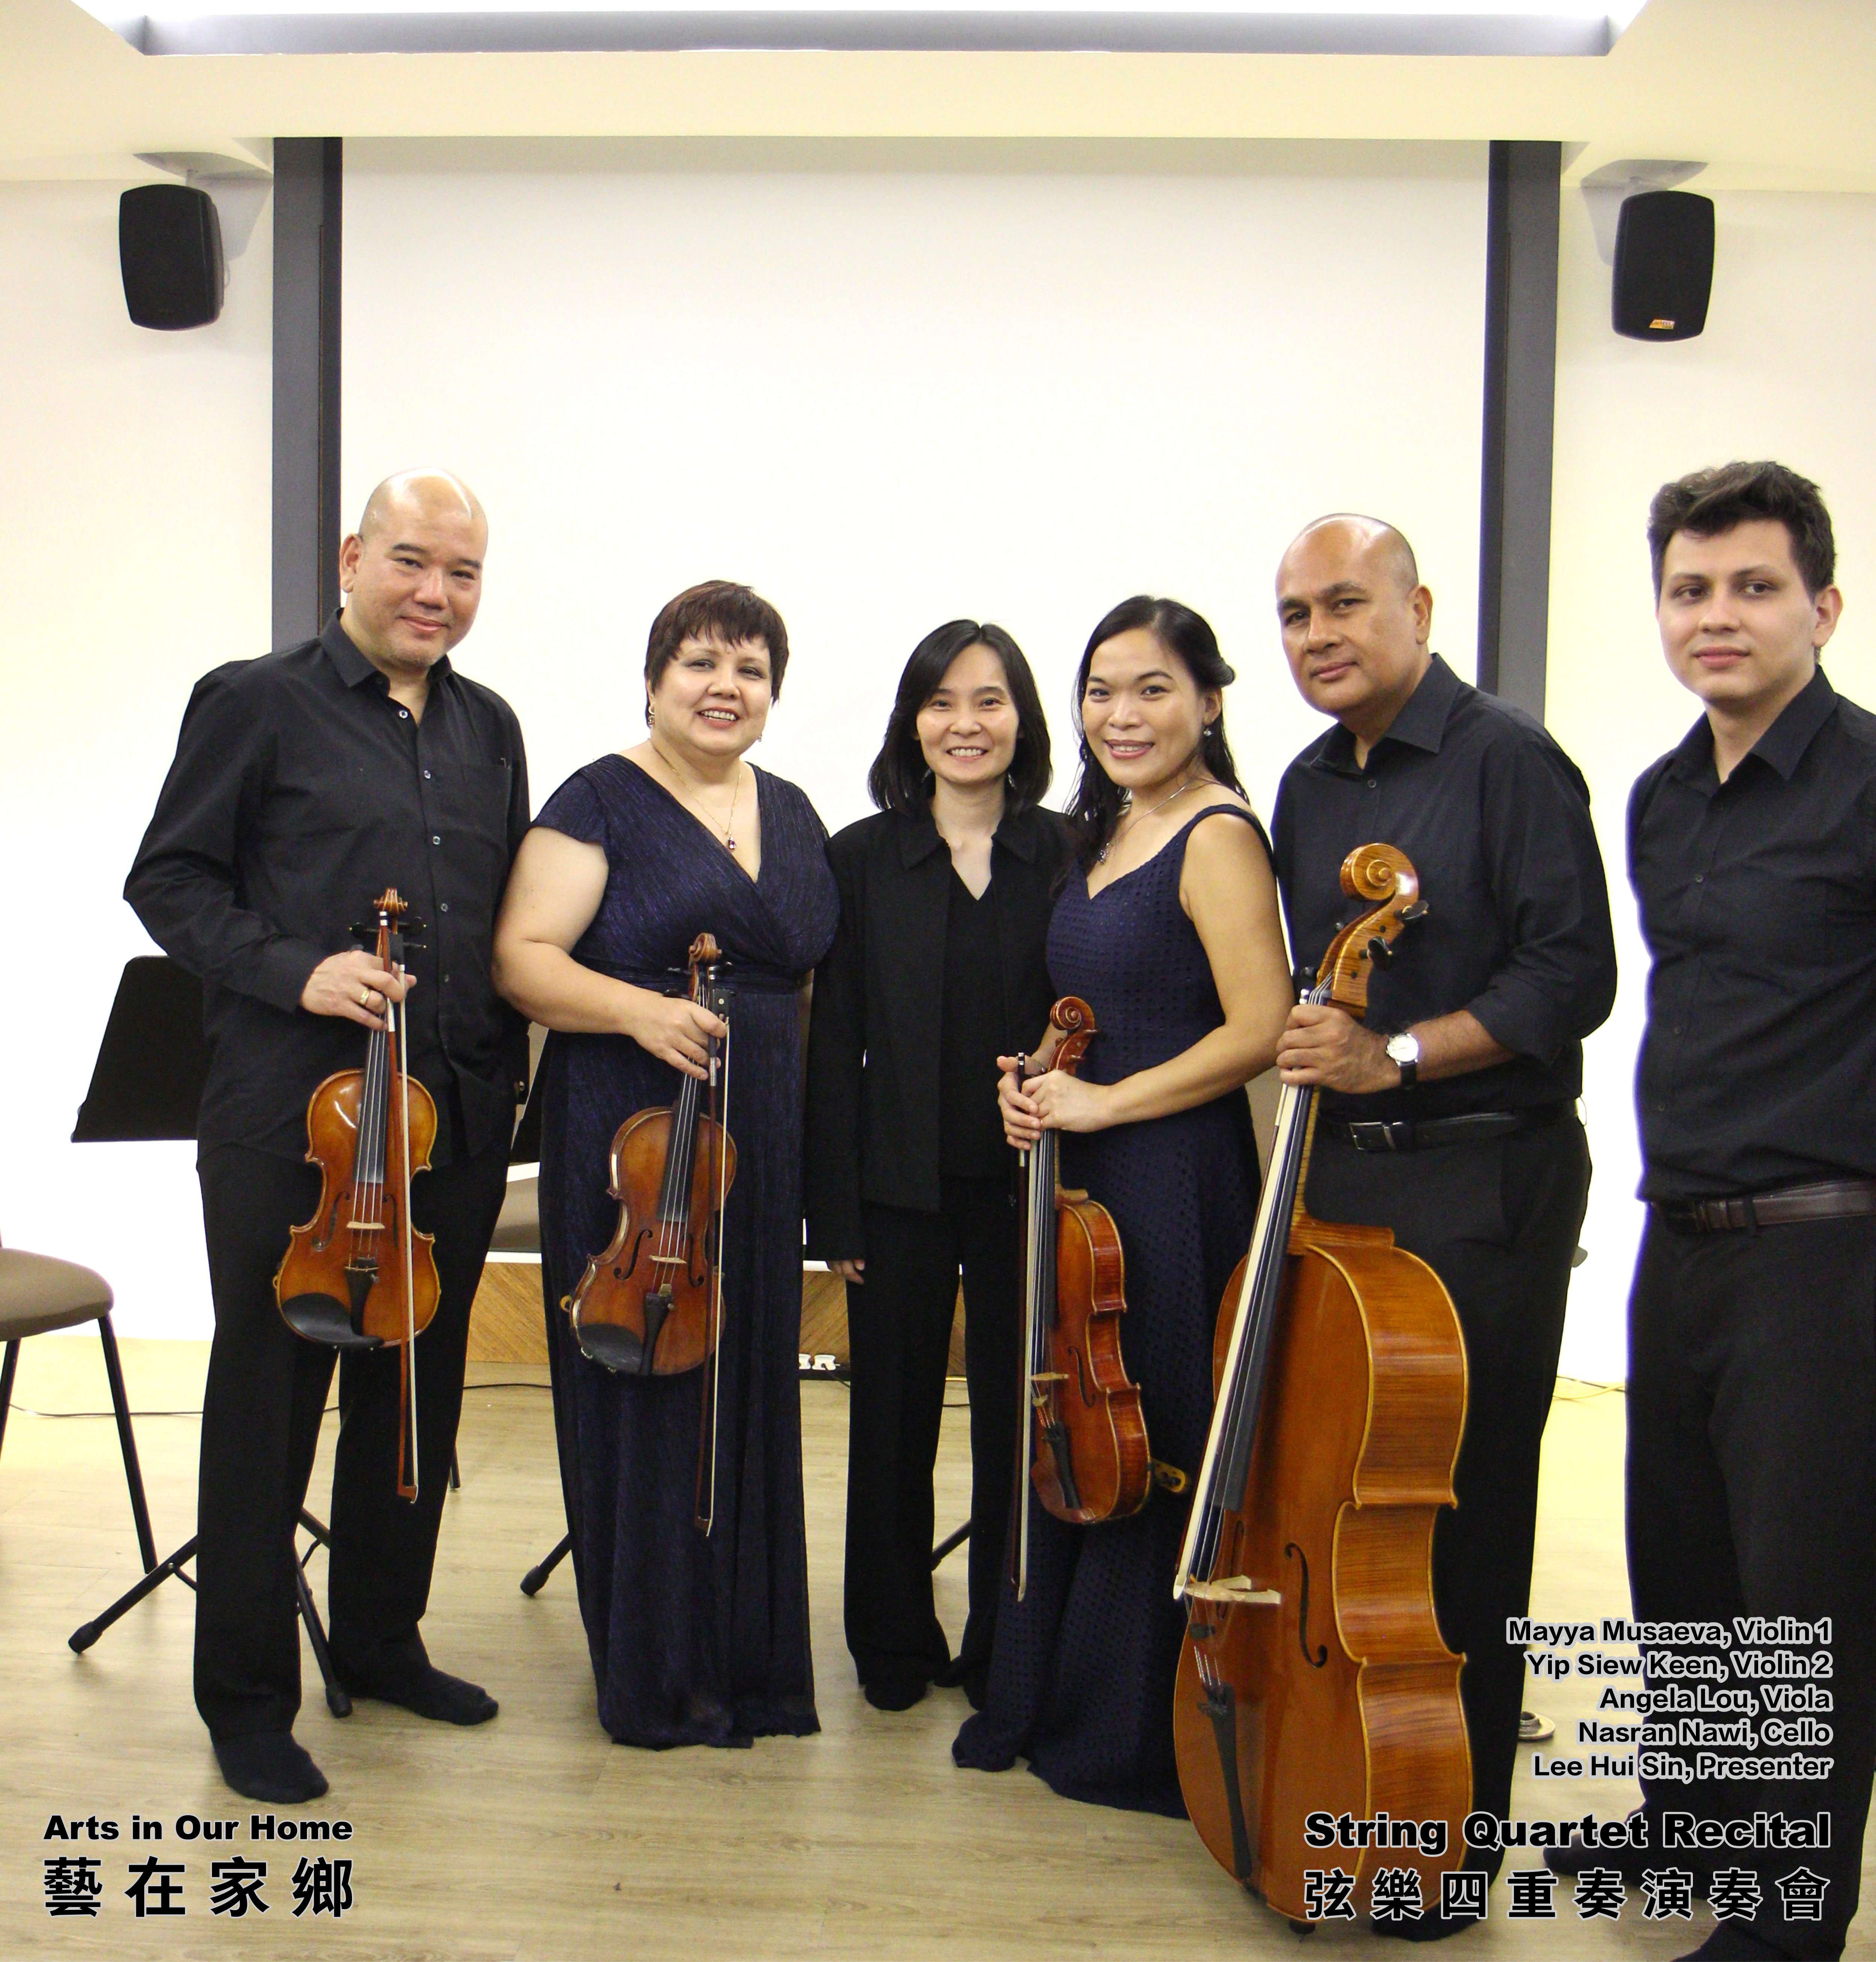 String Quartet Recital Arts in Our Home Batu Pahat Johor Malaysia 弦乐四重奏演奏会 艺在家乡 峇株巴辖 柔佛 马来西亚 A016